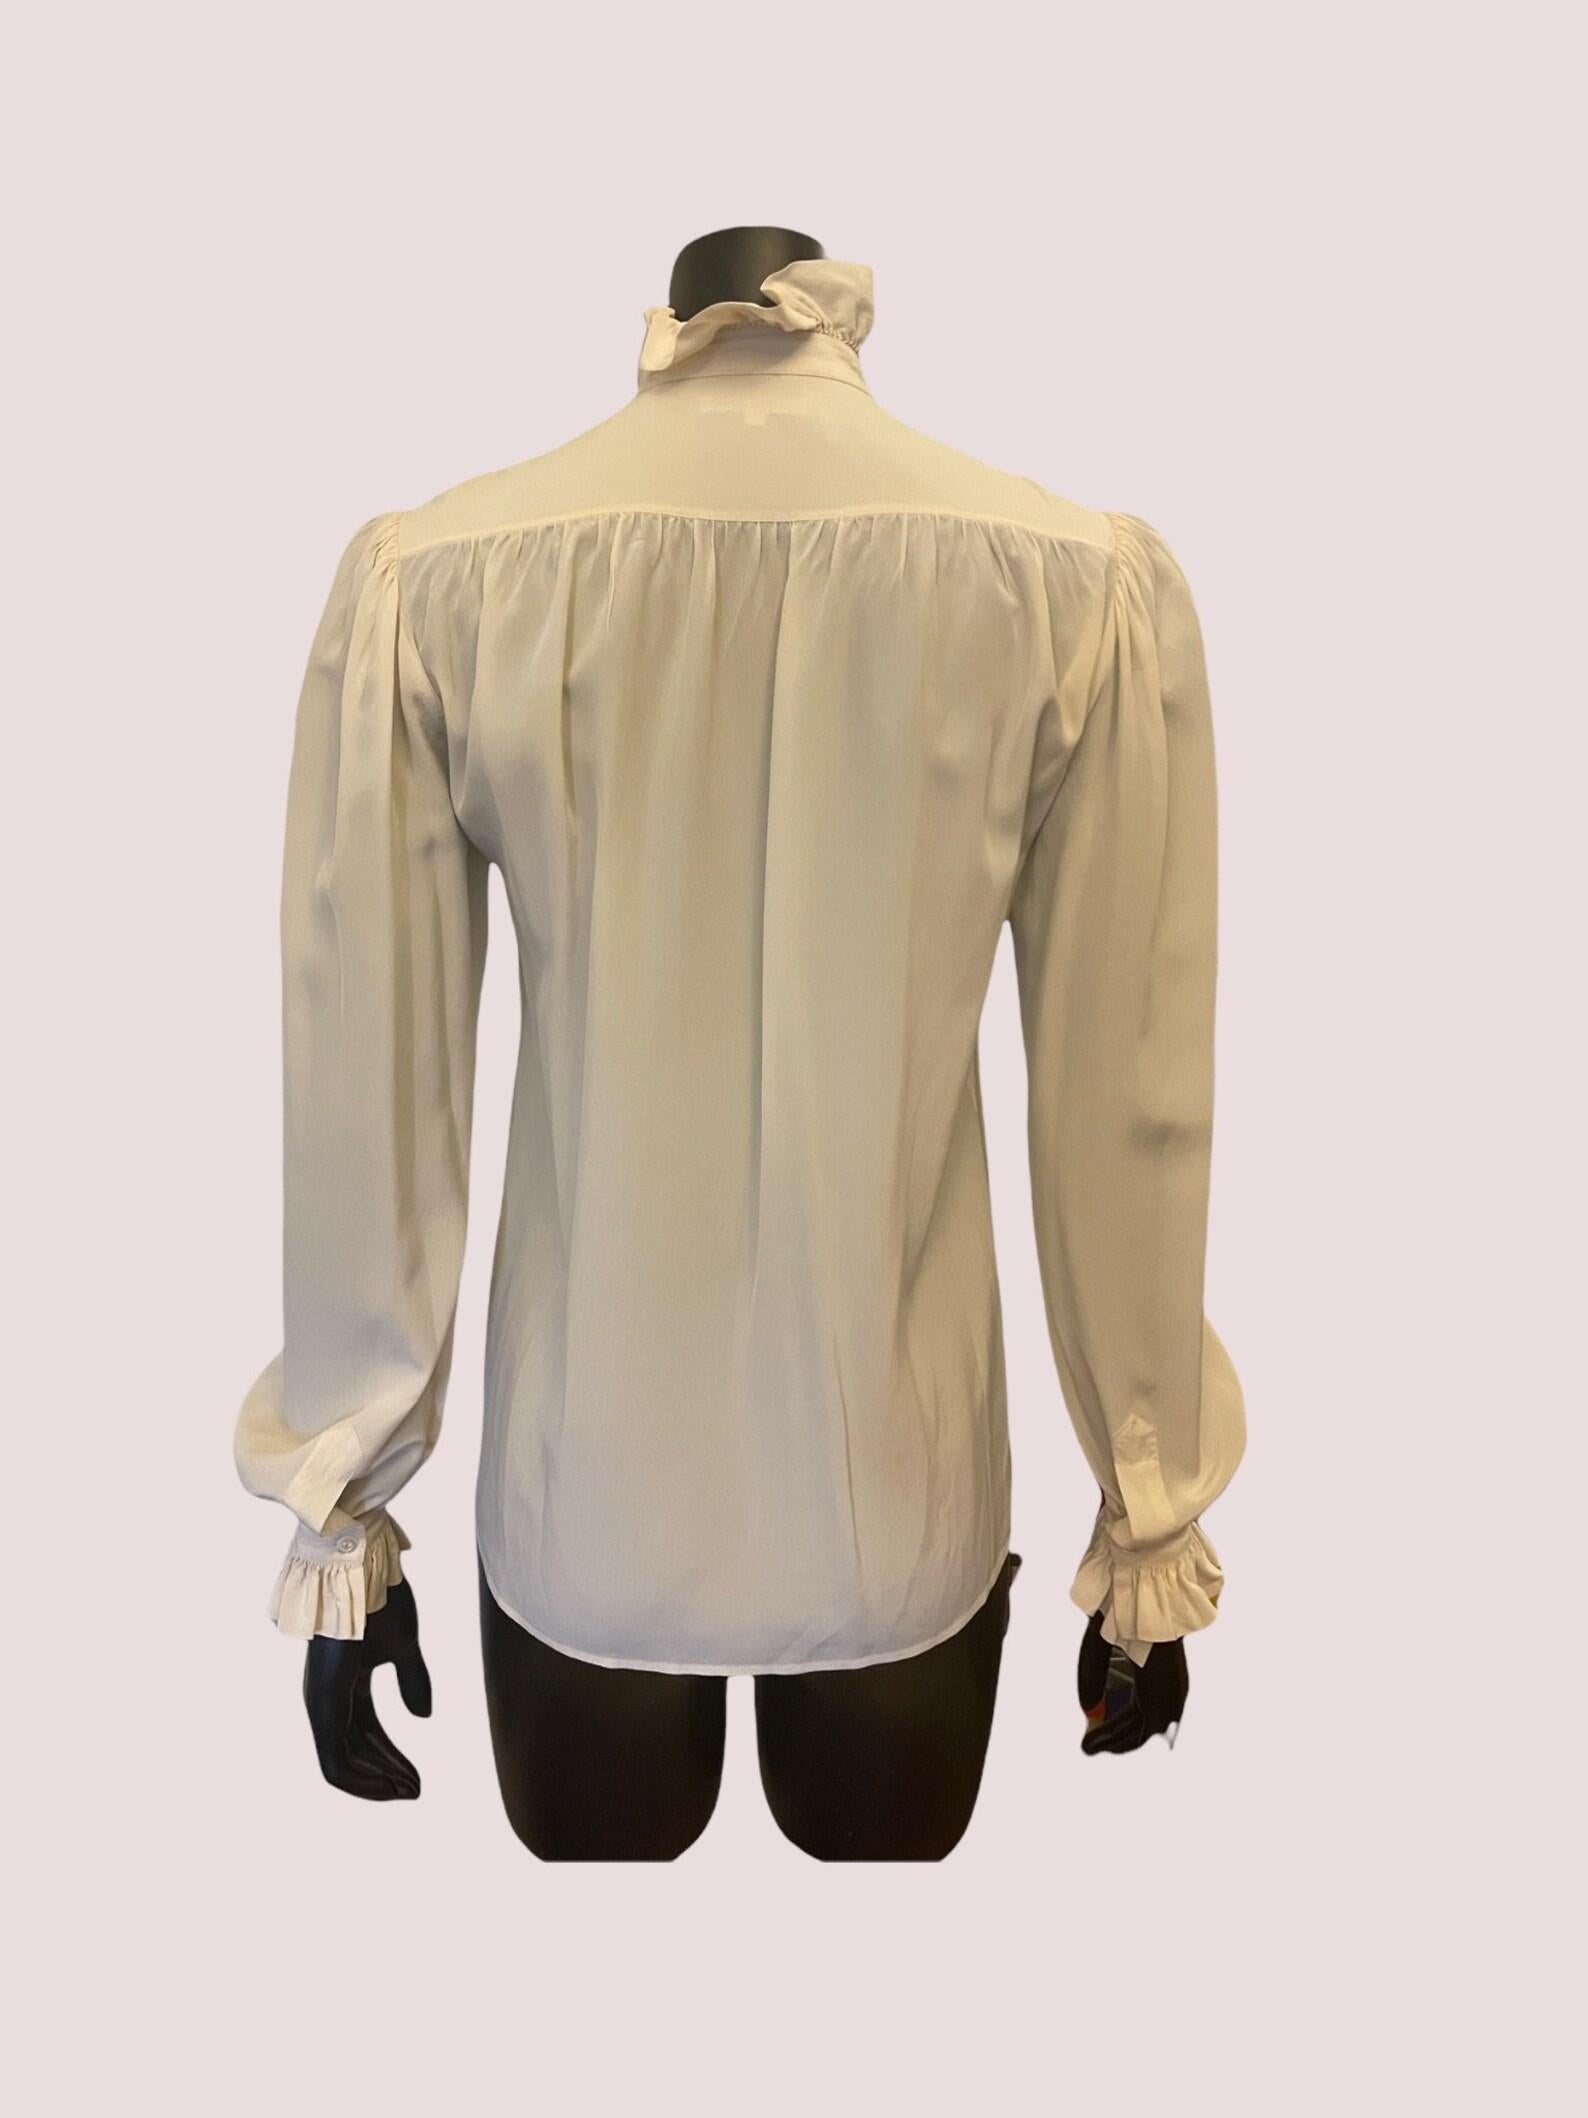 Yves Saint Laurent Bone Beige Silk Blouse, Circa 1970s For Sale 3